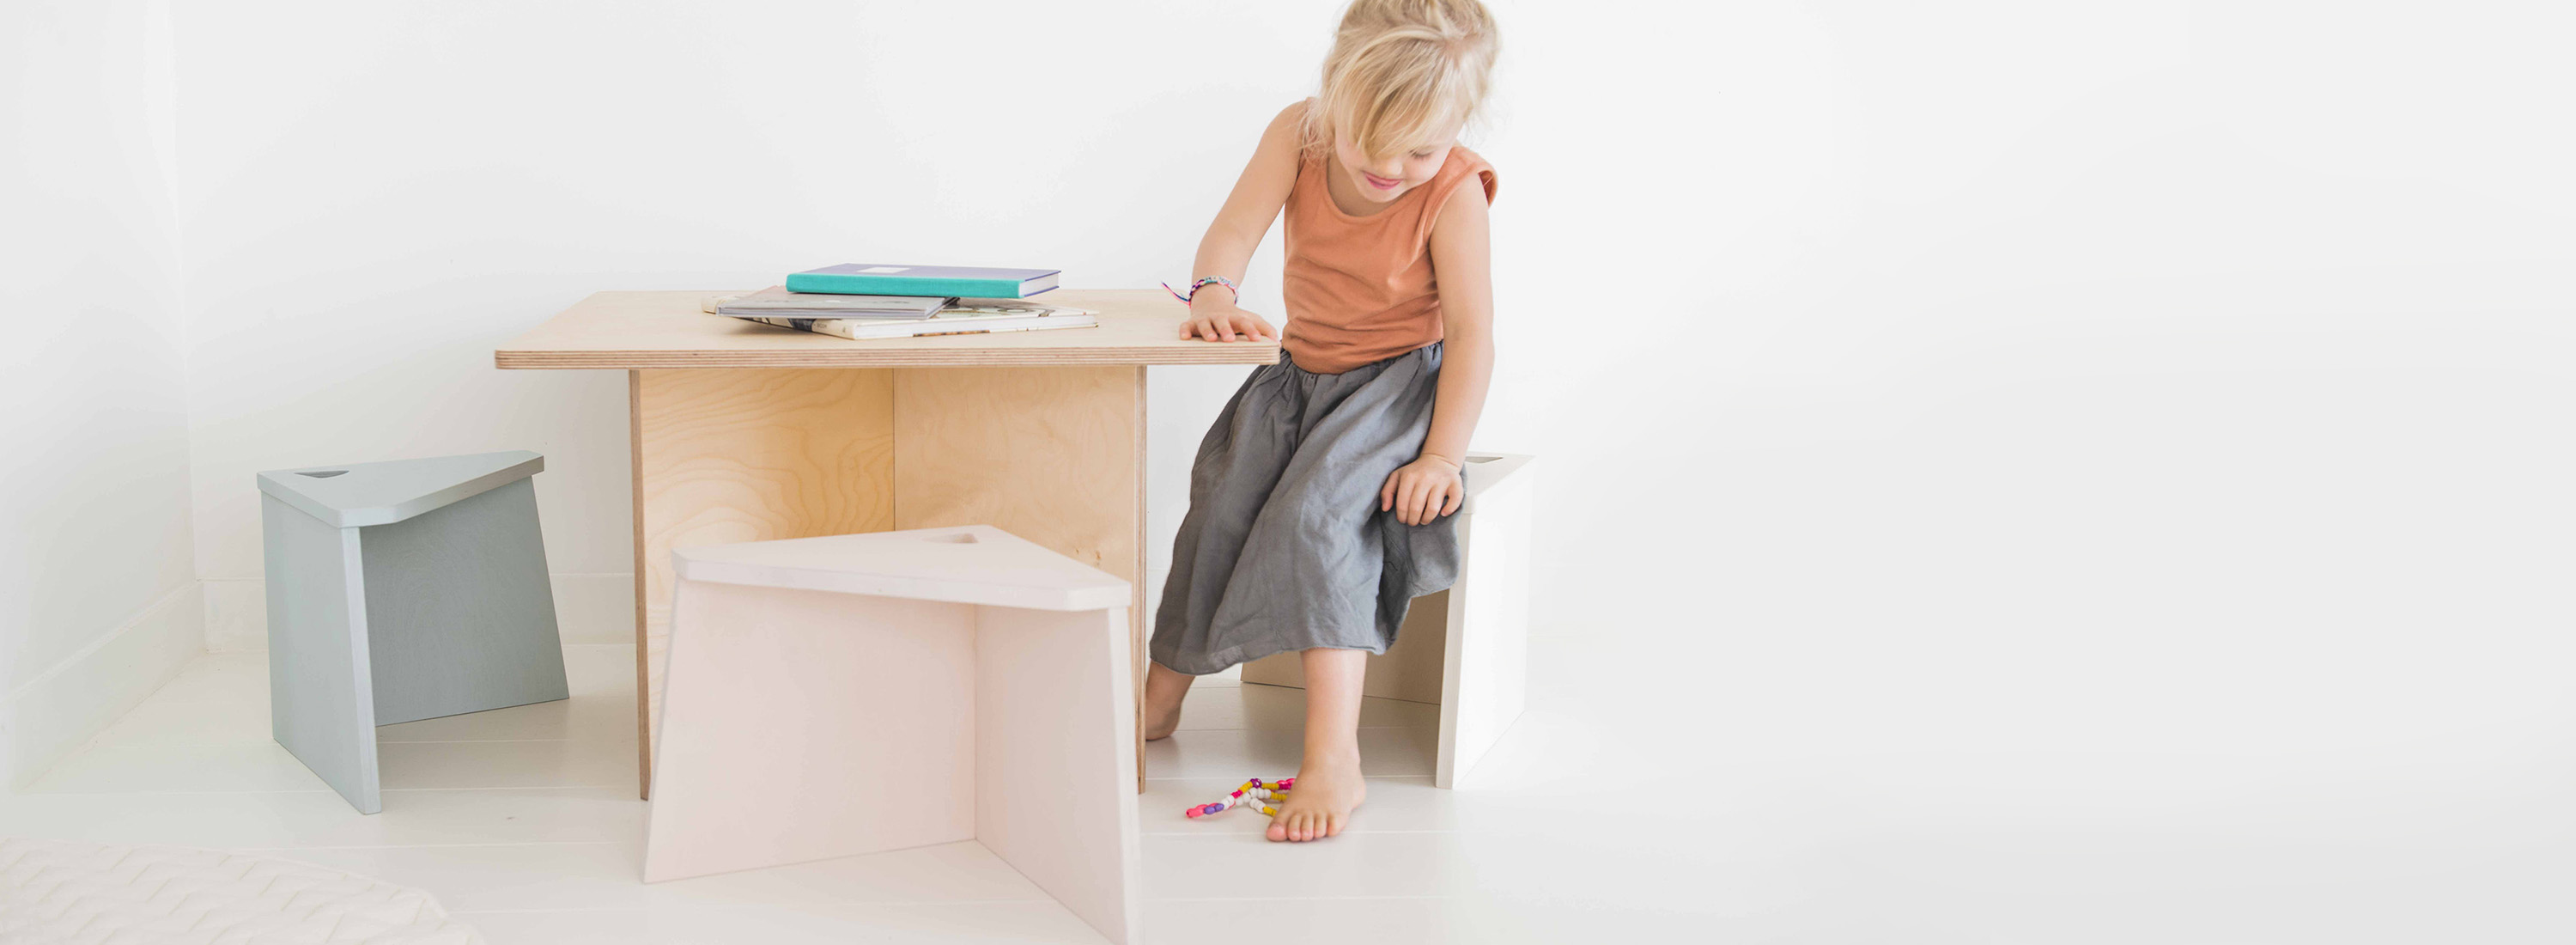 Timmer Atelje Kids Furniture Design